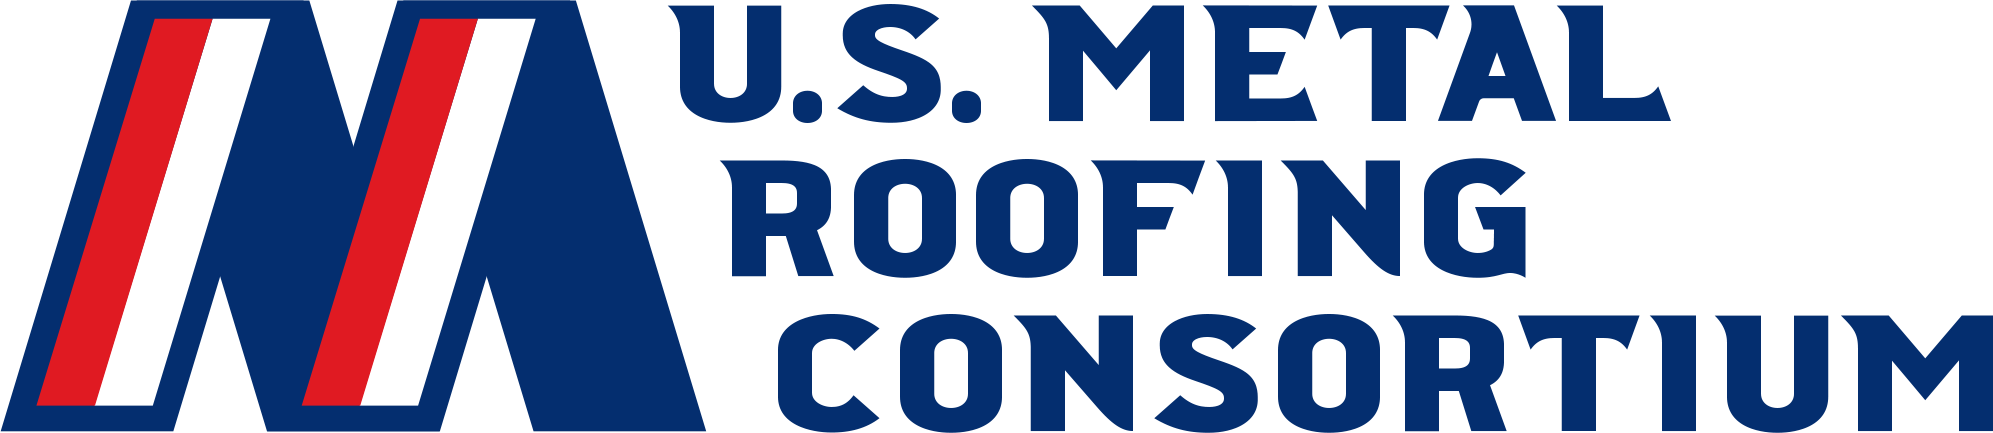 US Metal Roofing Consortium